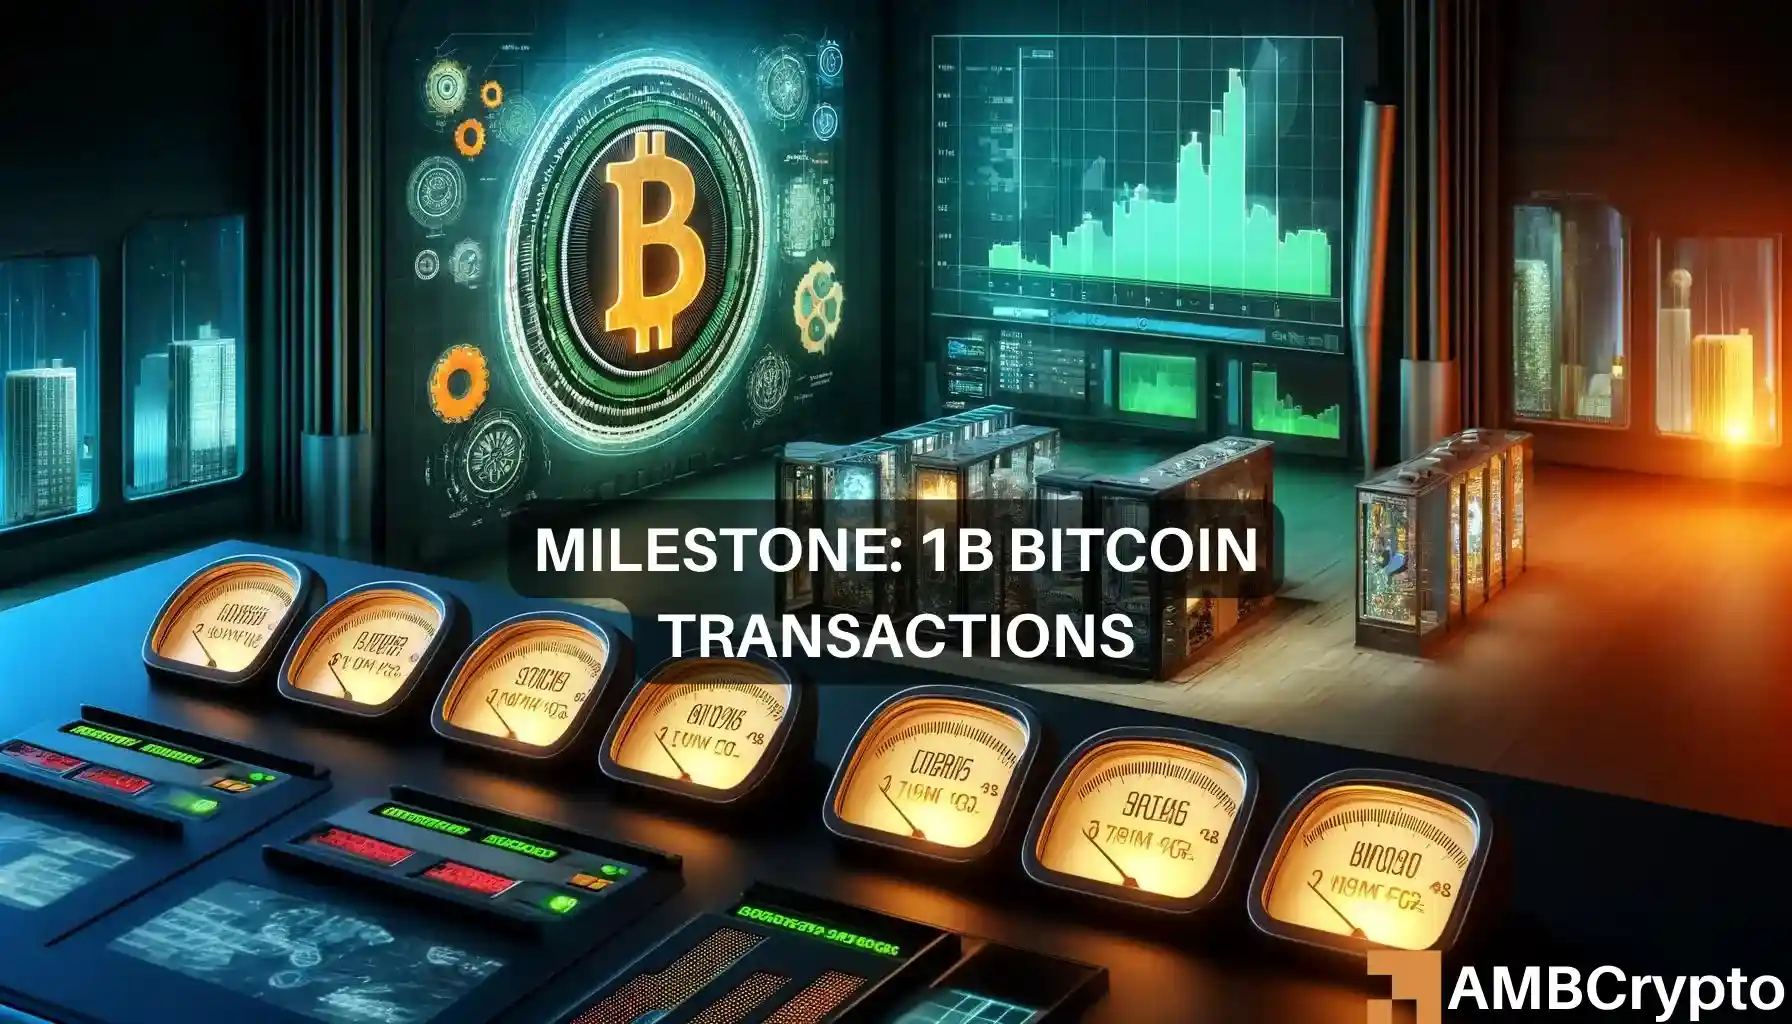 Will Bitcoin's 1B transaction record give BTC the push it needs?